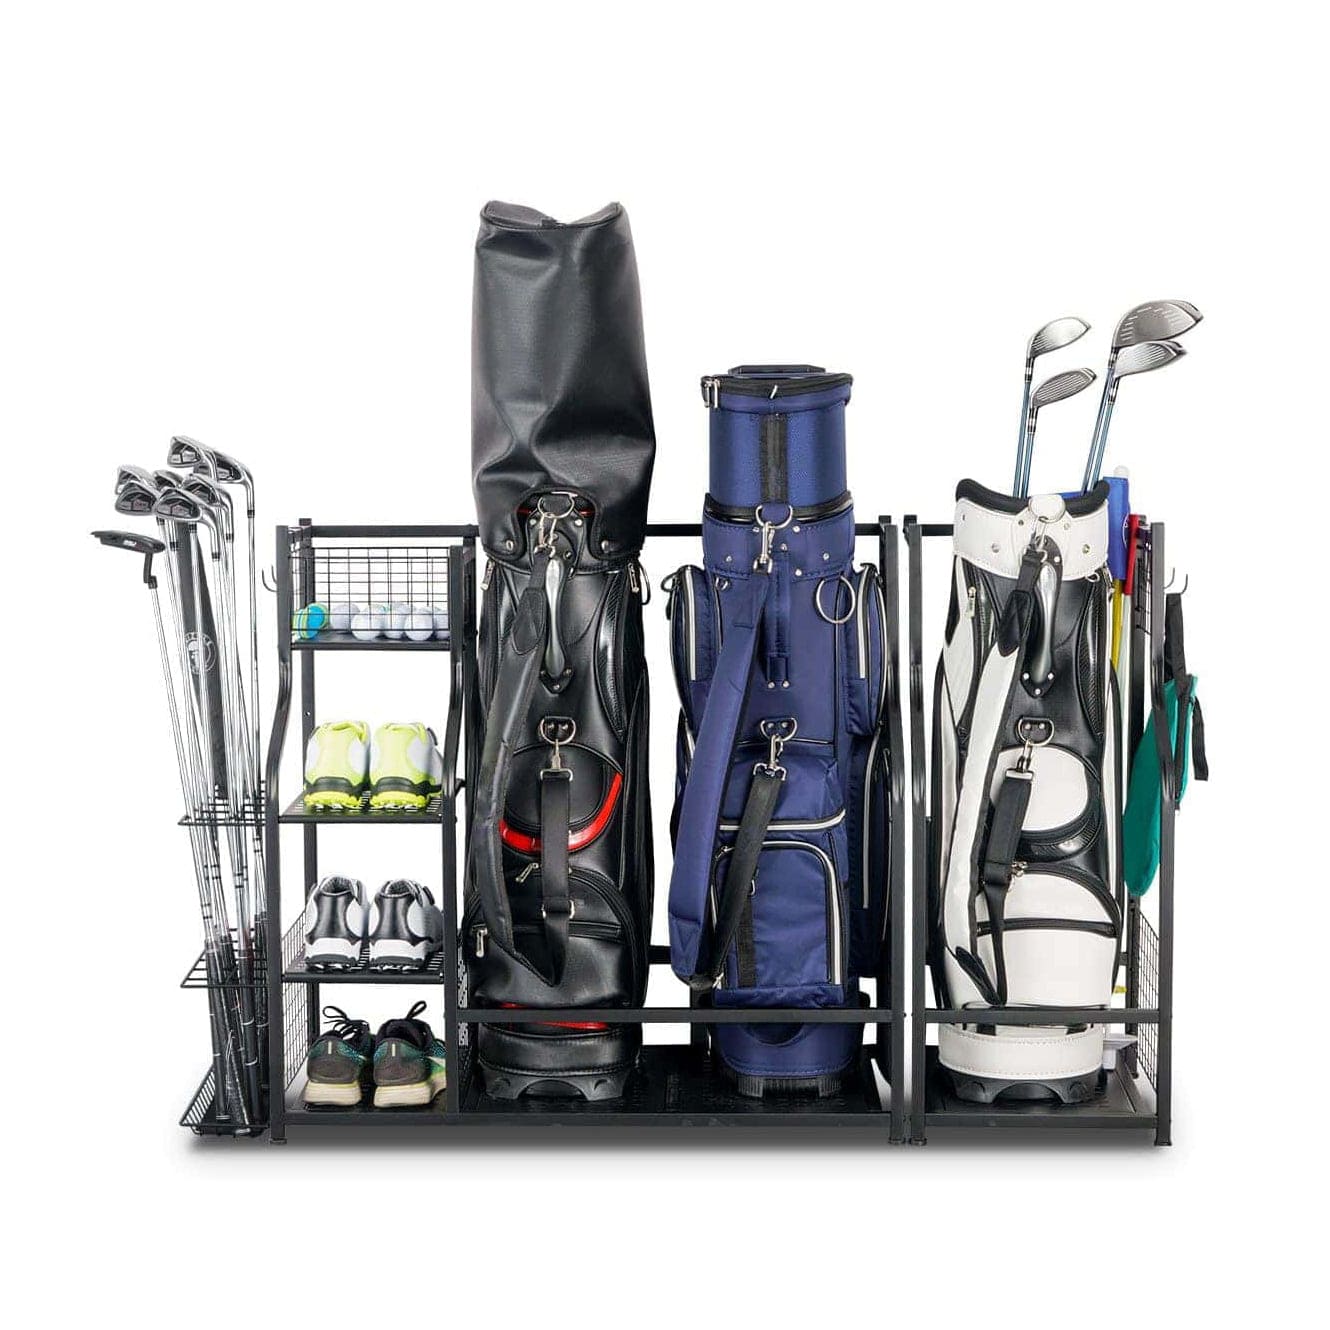 Mythinglogic Golf Storage Garage Organizer, 2 Spain